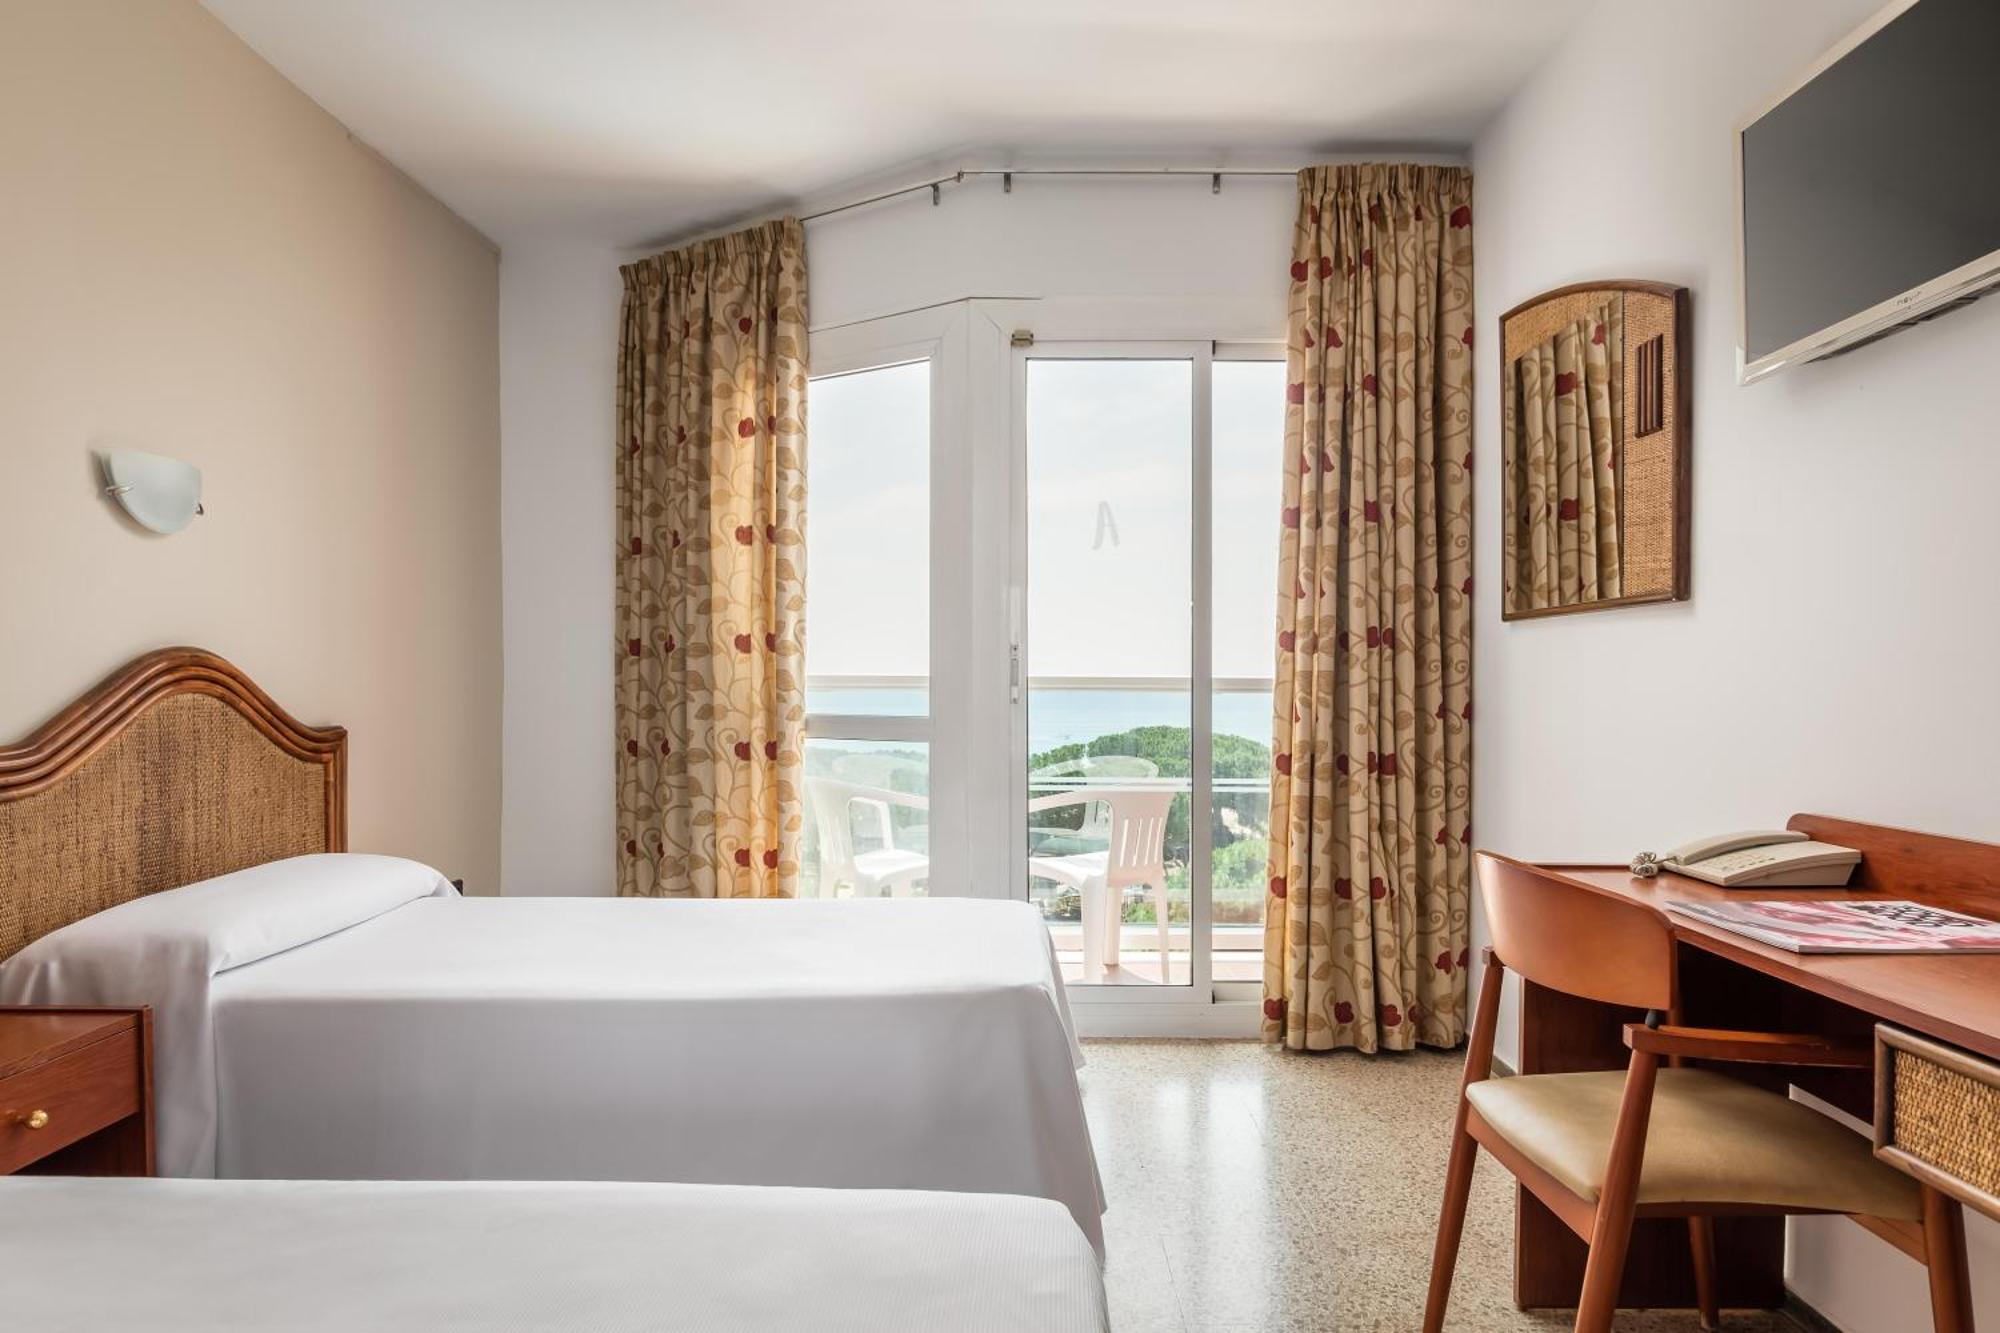 Hotel Cartago Nova By Alegria Malgrat de Mar Exteriér fotografie